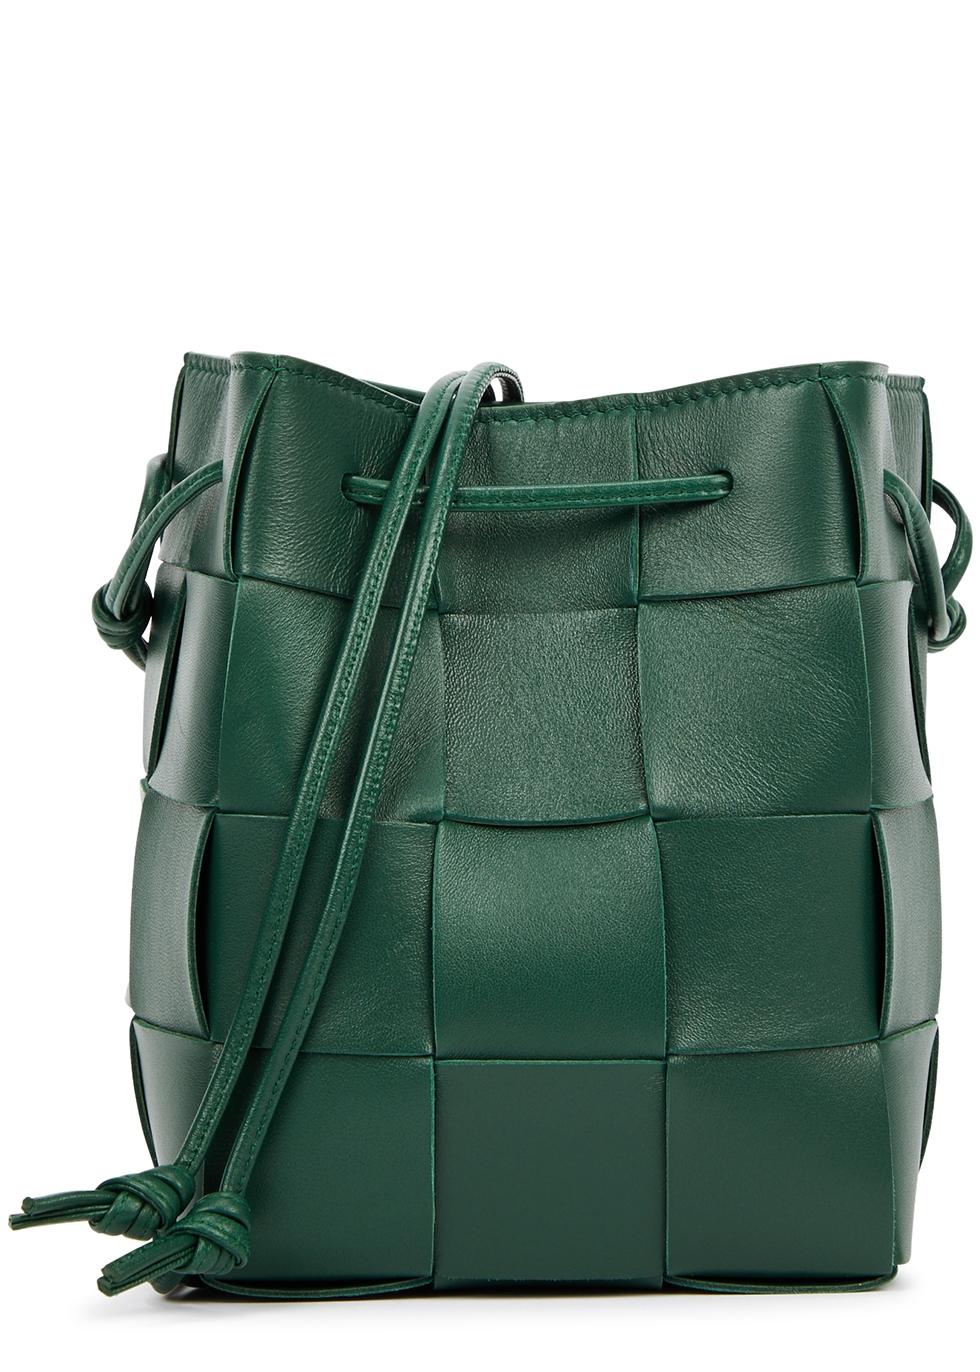 Bottega Veneta Intrecciato Small Leather Bucket Bag in Green